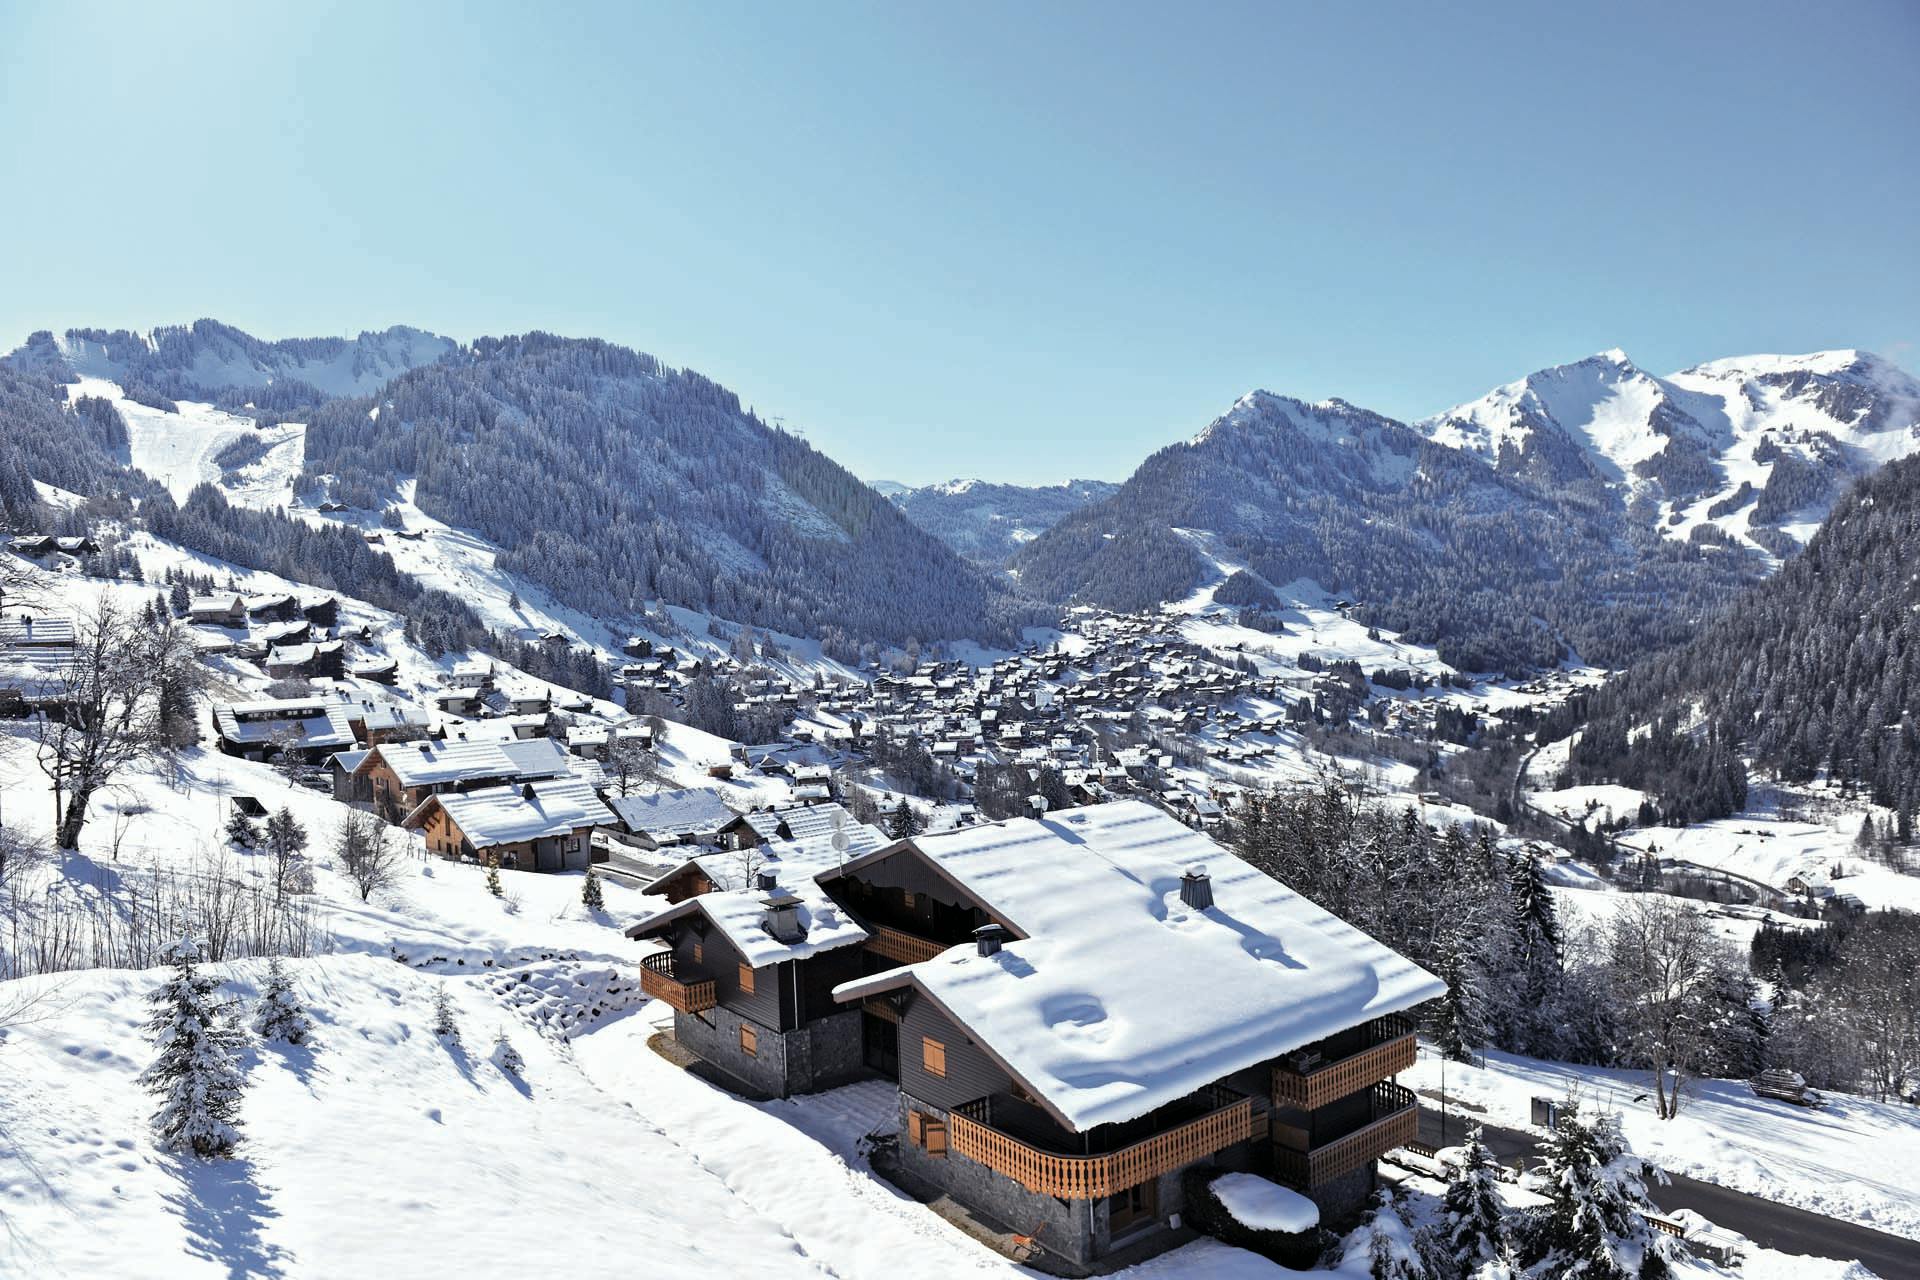 Chatel ski resort after snowfall